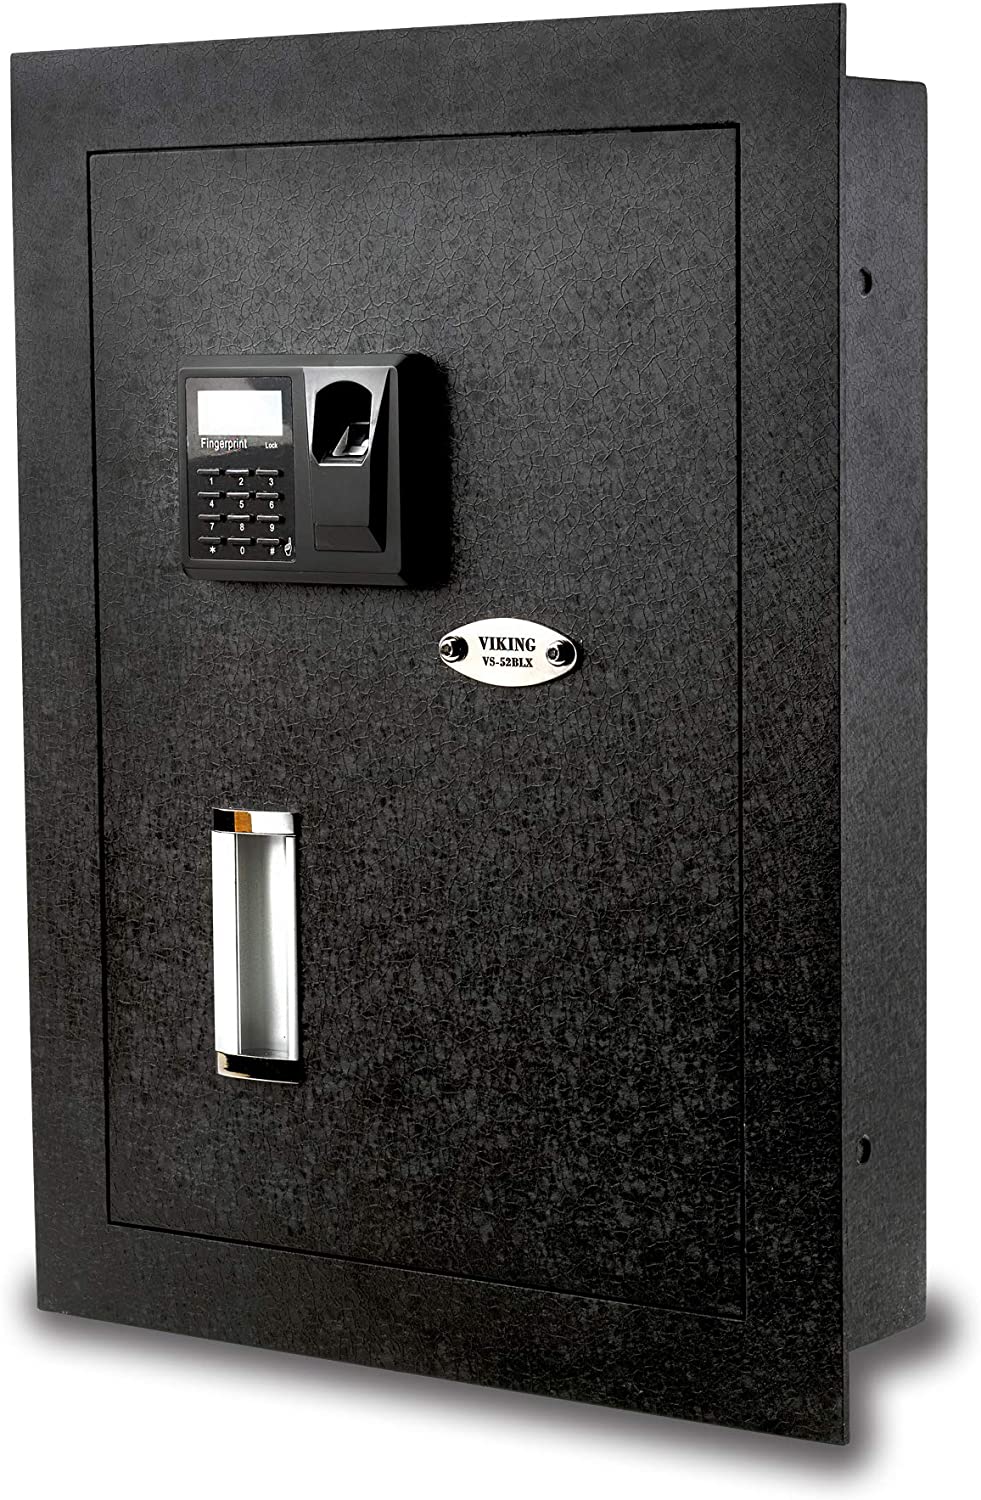 types of safes